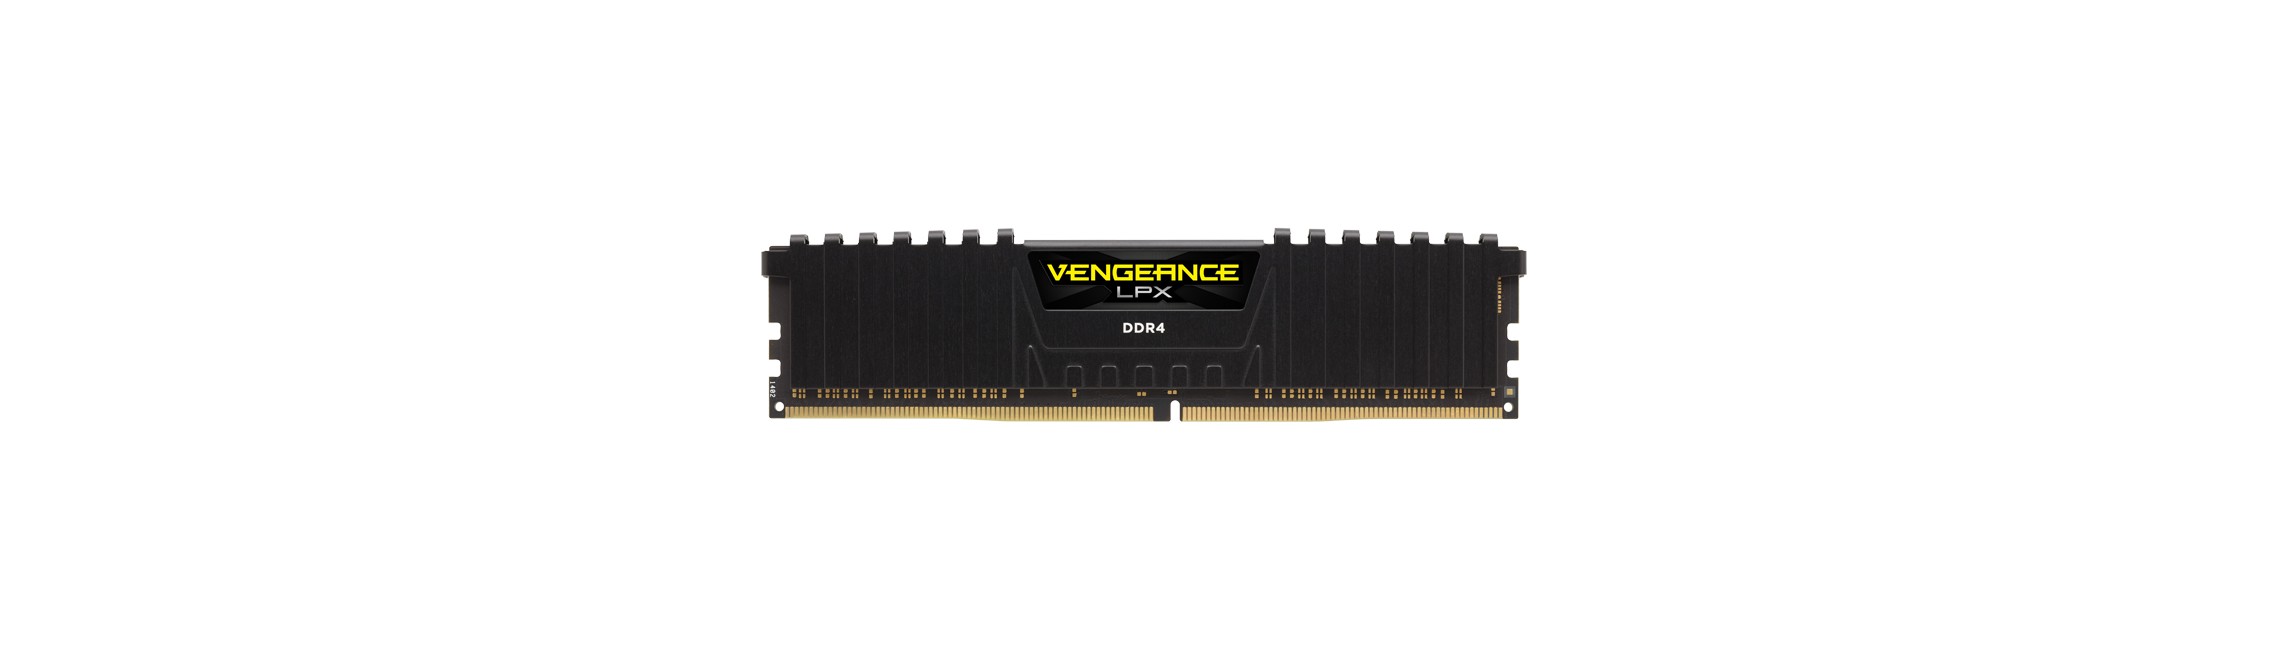 Corsair Vengeance LPX, 8GB, DDR4 8GB DDR4 3000MHz memory module